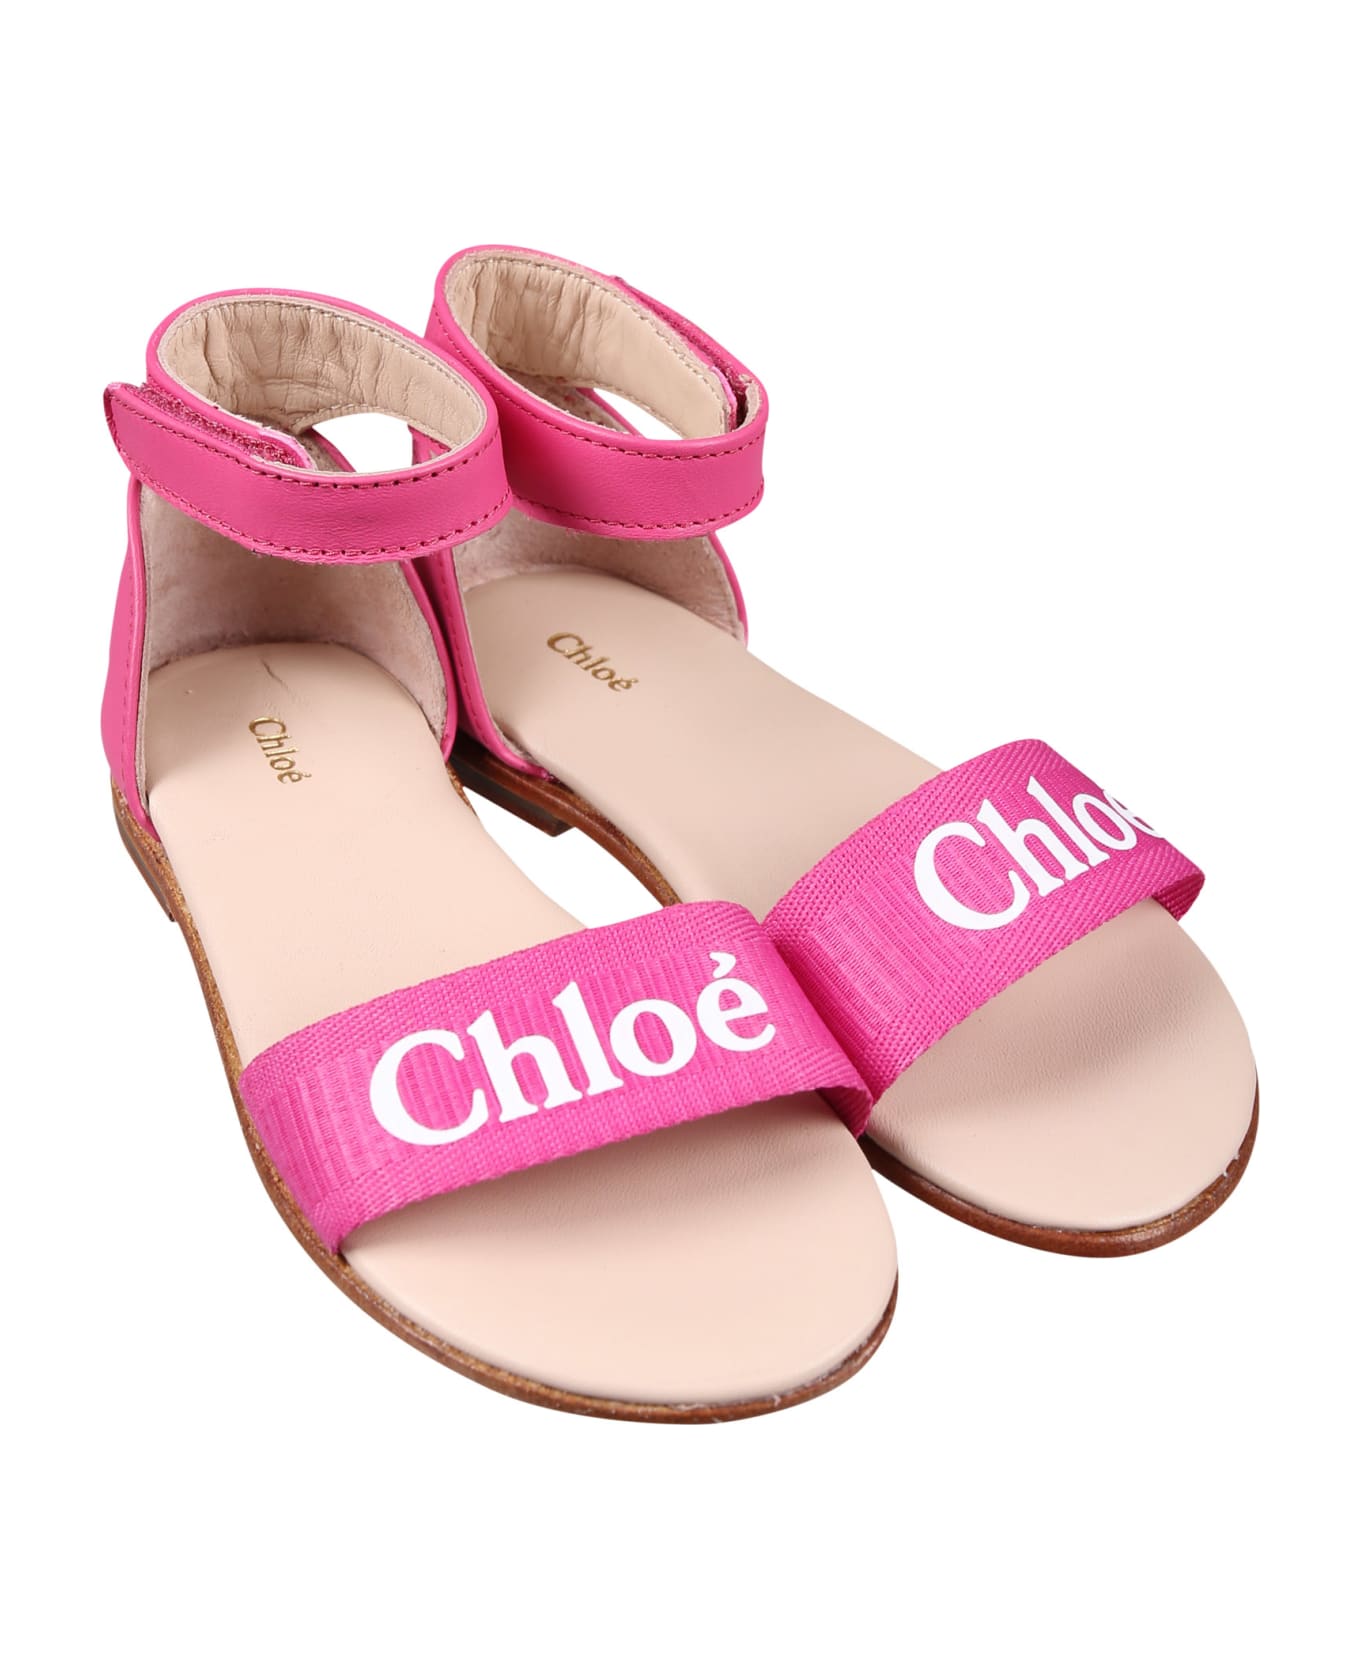 Chloé Fuchsia Sandals For Girl With Logo - Fuchsia